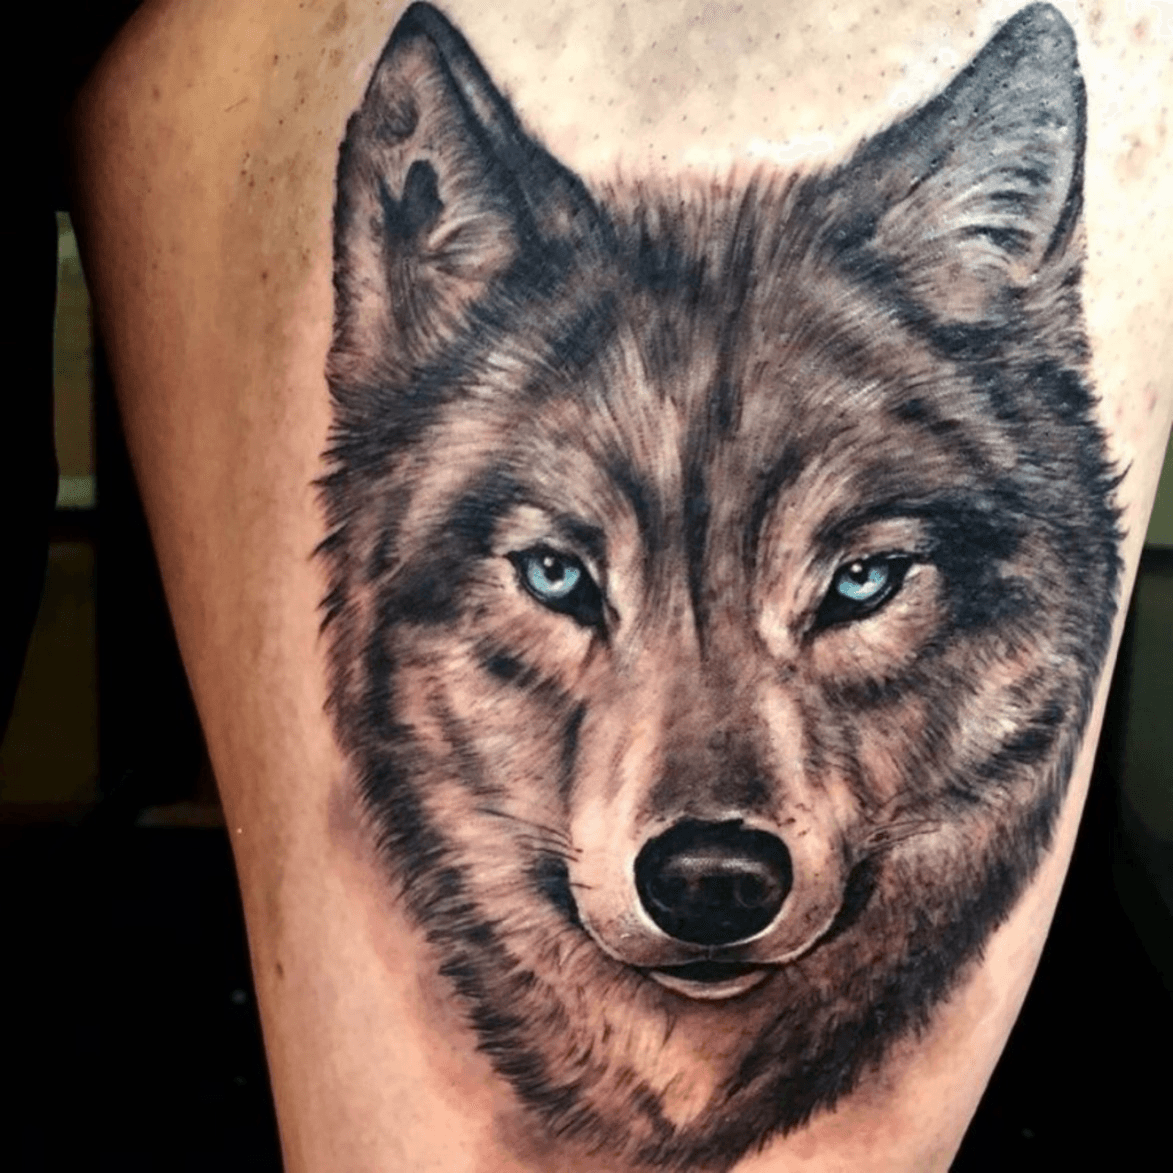 BLUE WOLF TATTOO  Painting style Animals Wolf tattoo